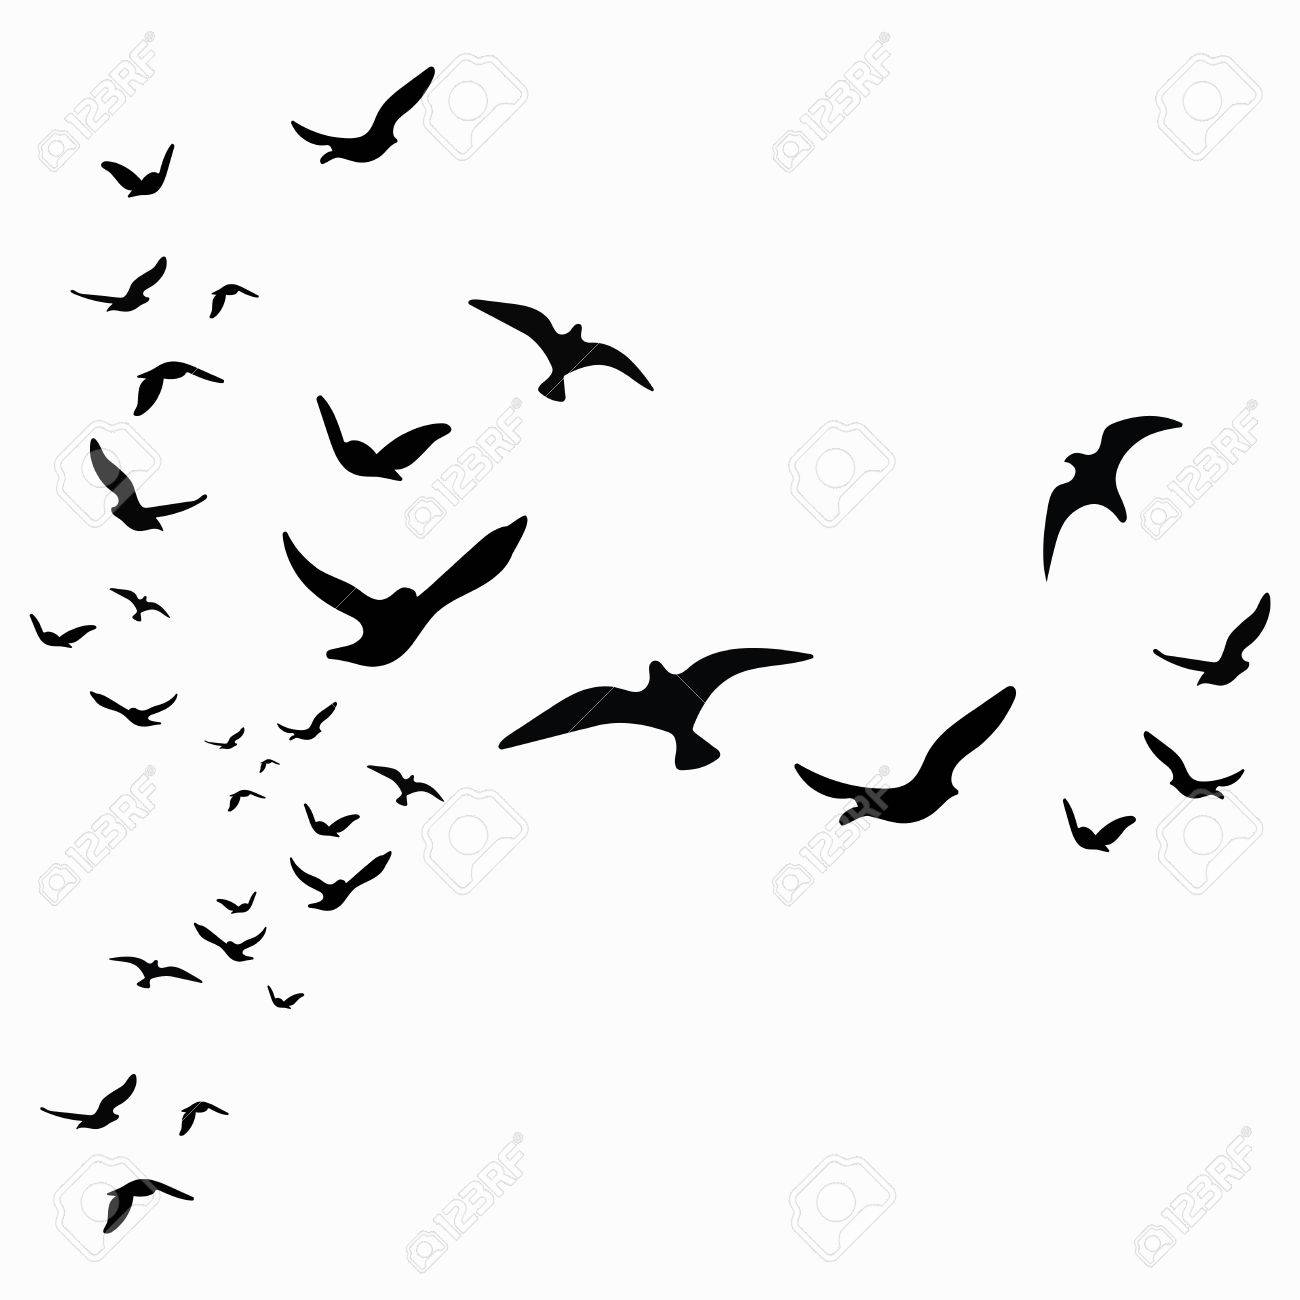 Silhouette Of A Flock Of Birds Black Contours Of Flying Birds regarding measurements 1300 X 1300